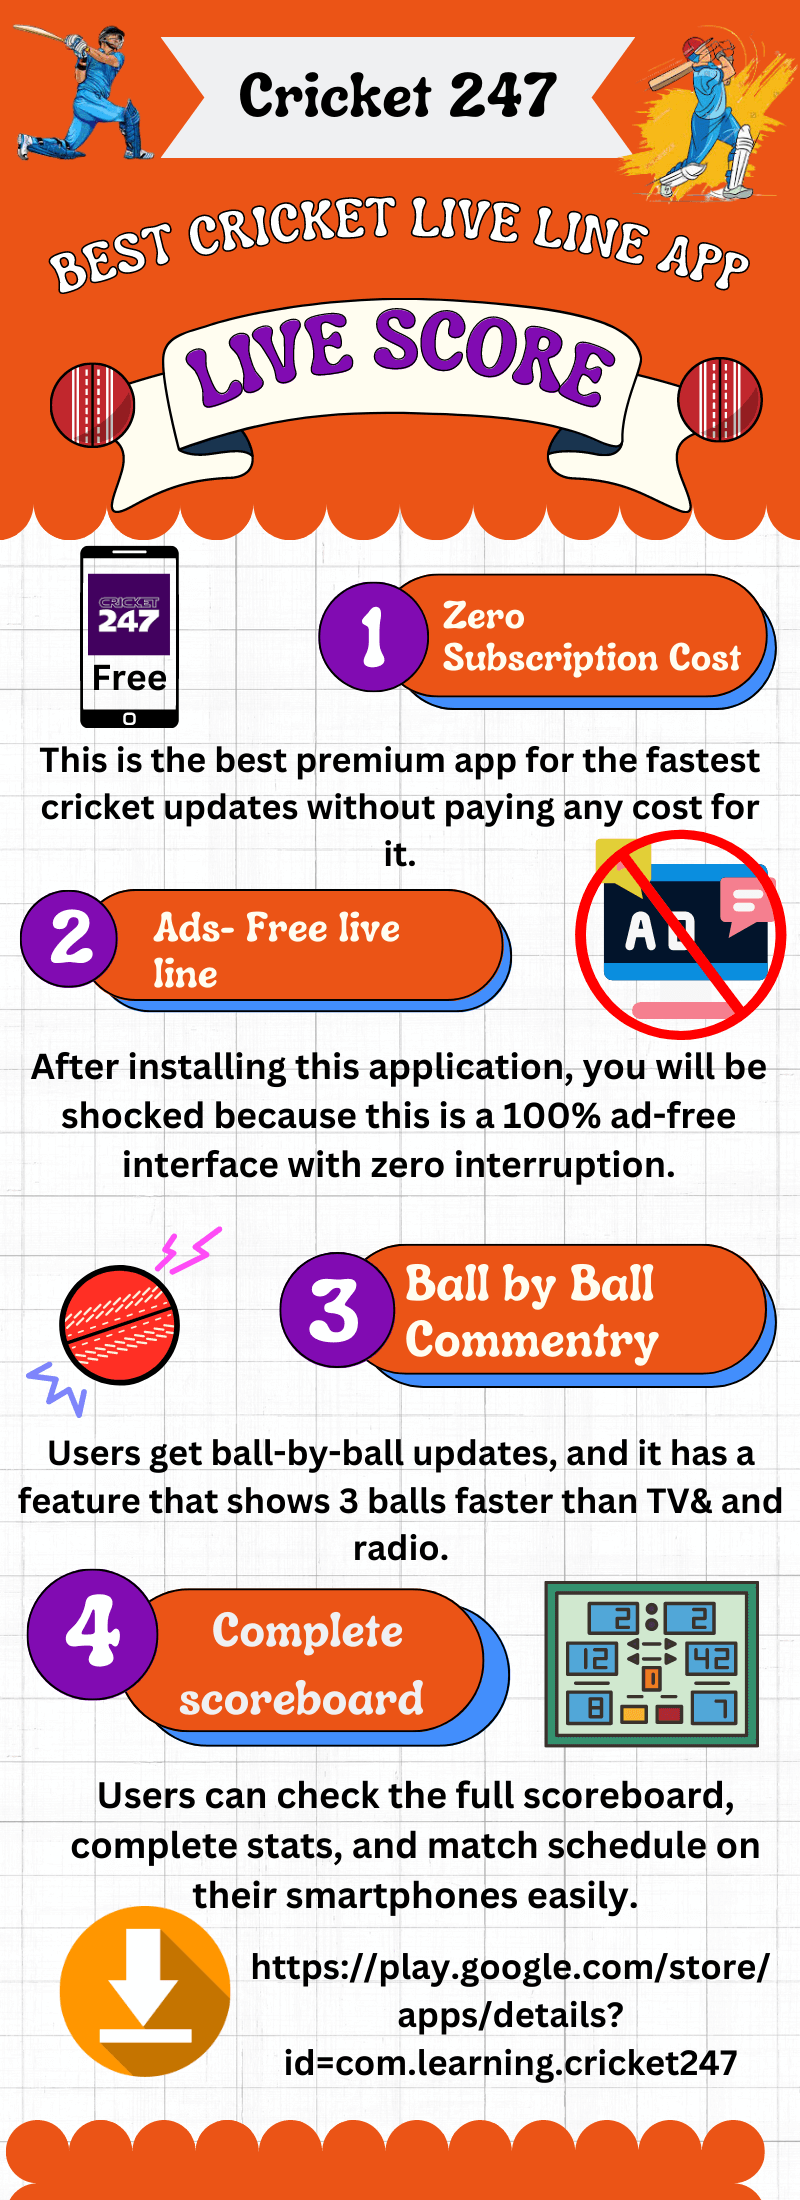 Best live Line App - cricket247